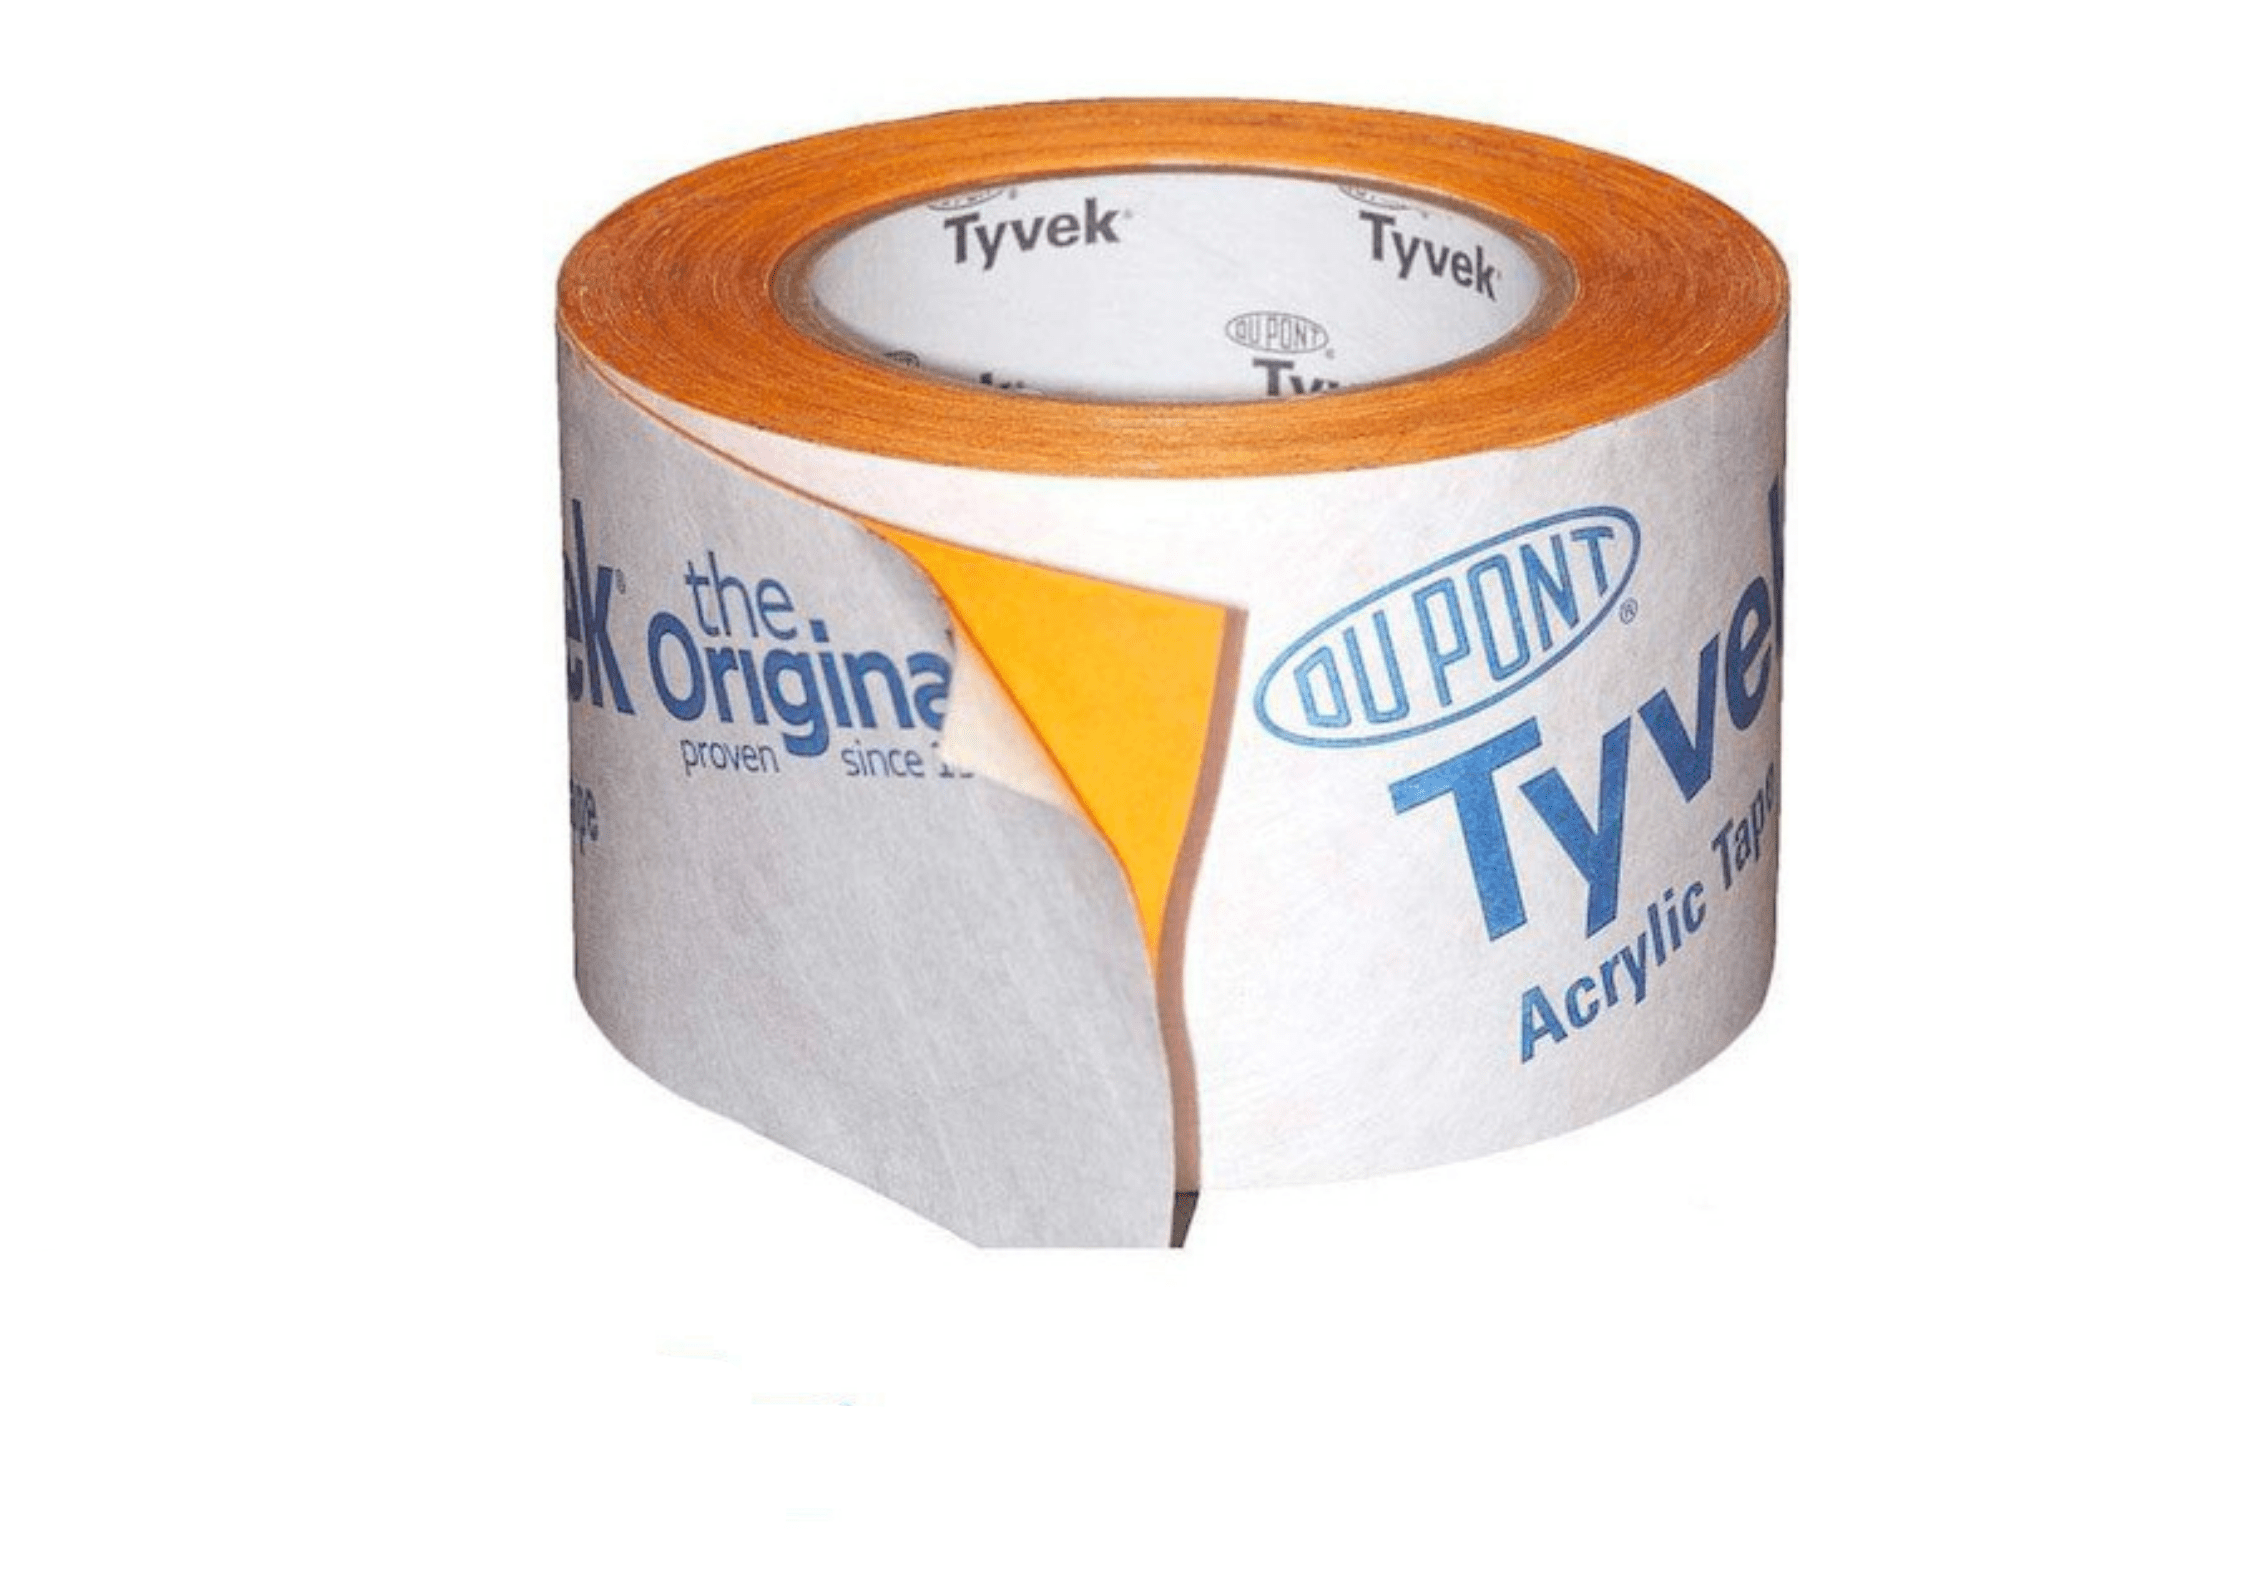 InsulationUK.co.uk Tyvek Tyvek Acrylic Single Sided Tape 75mm x 25m IUK01067 Tyvek Acrylic Single Sided Tape 75mm x 25m | insulationuk.co.uk